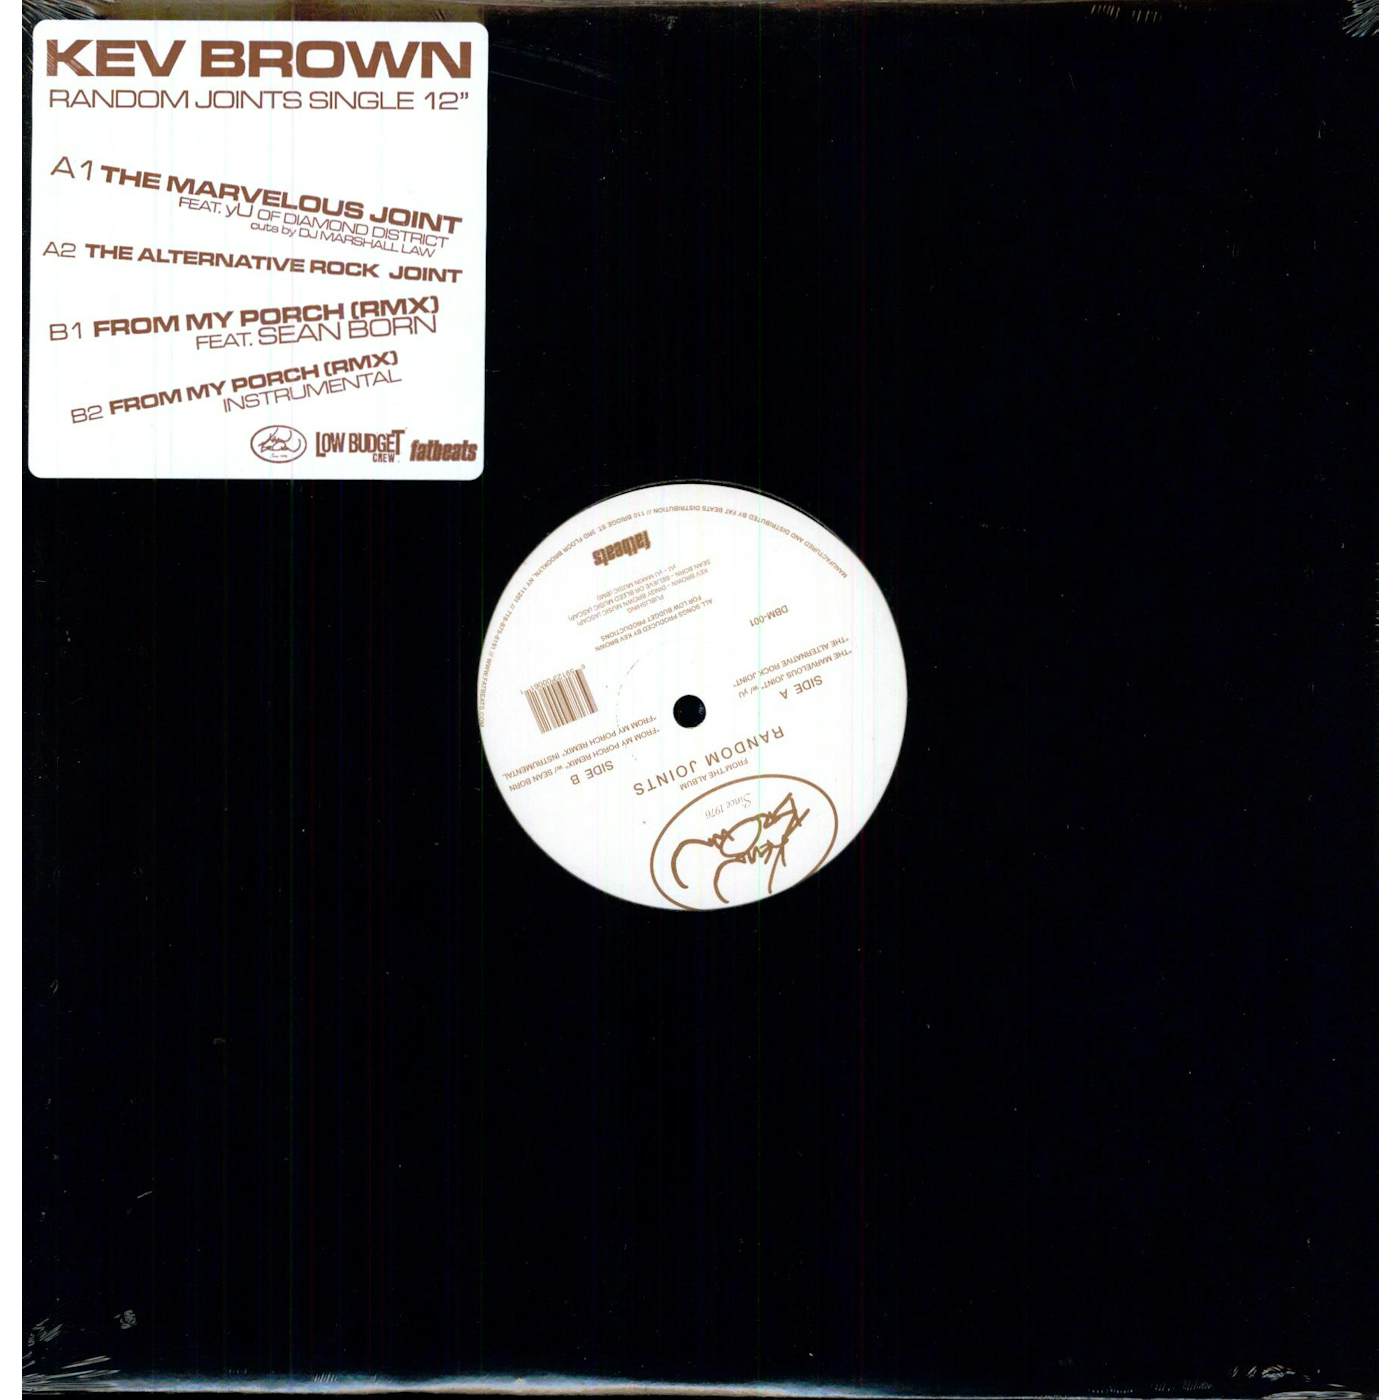 Kev Brown MARVELOUS JOIN Vinyl Record